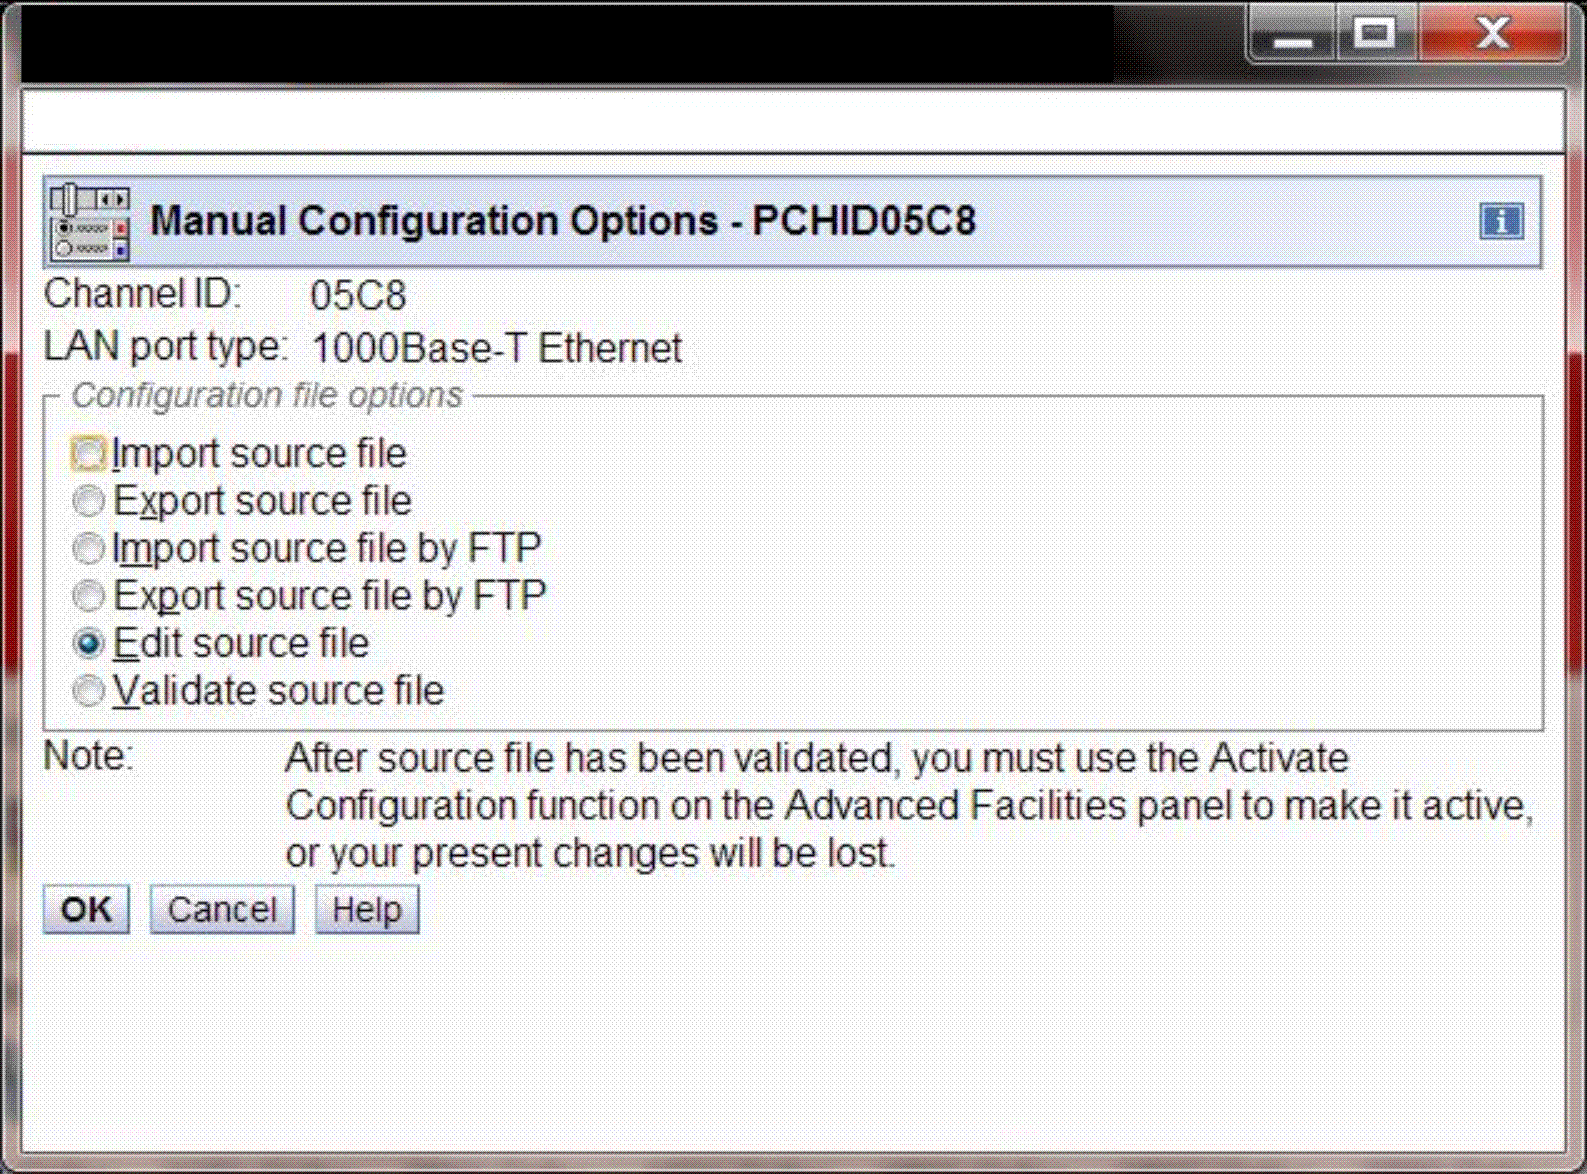 Manual Configuration Options window